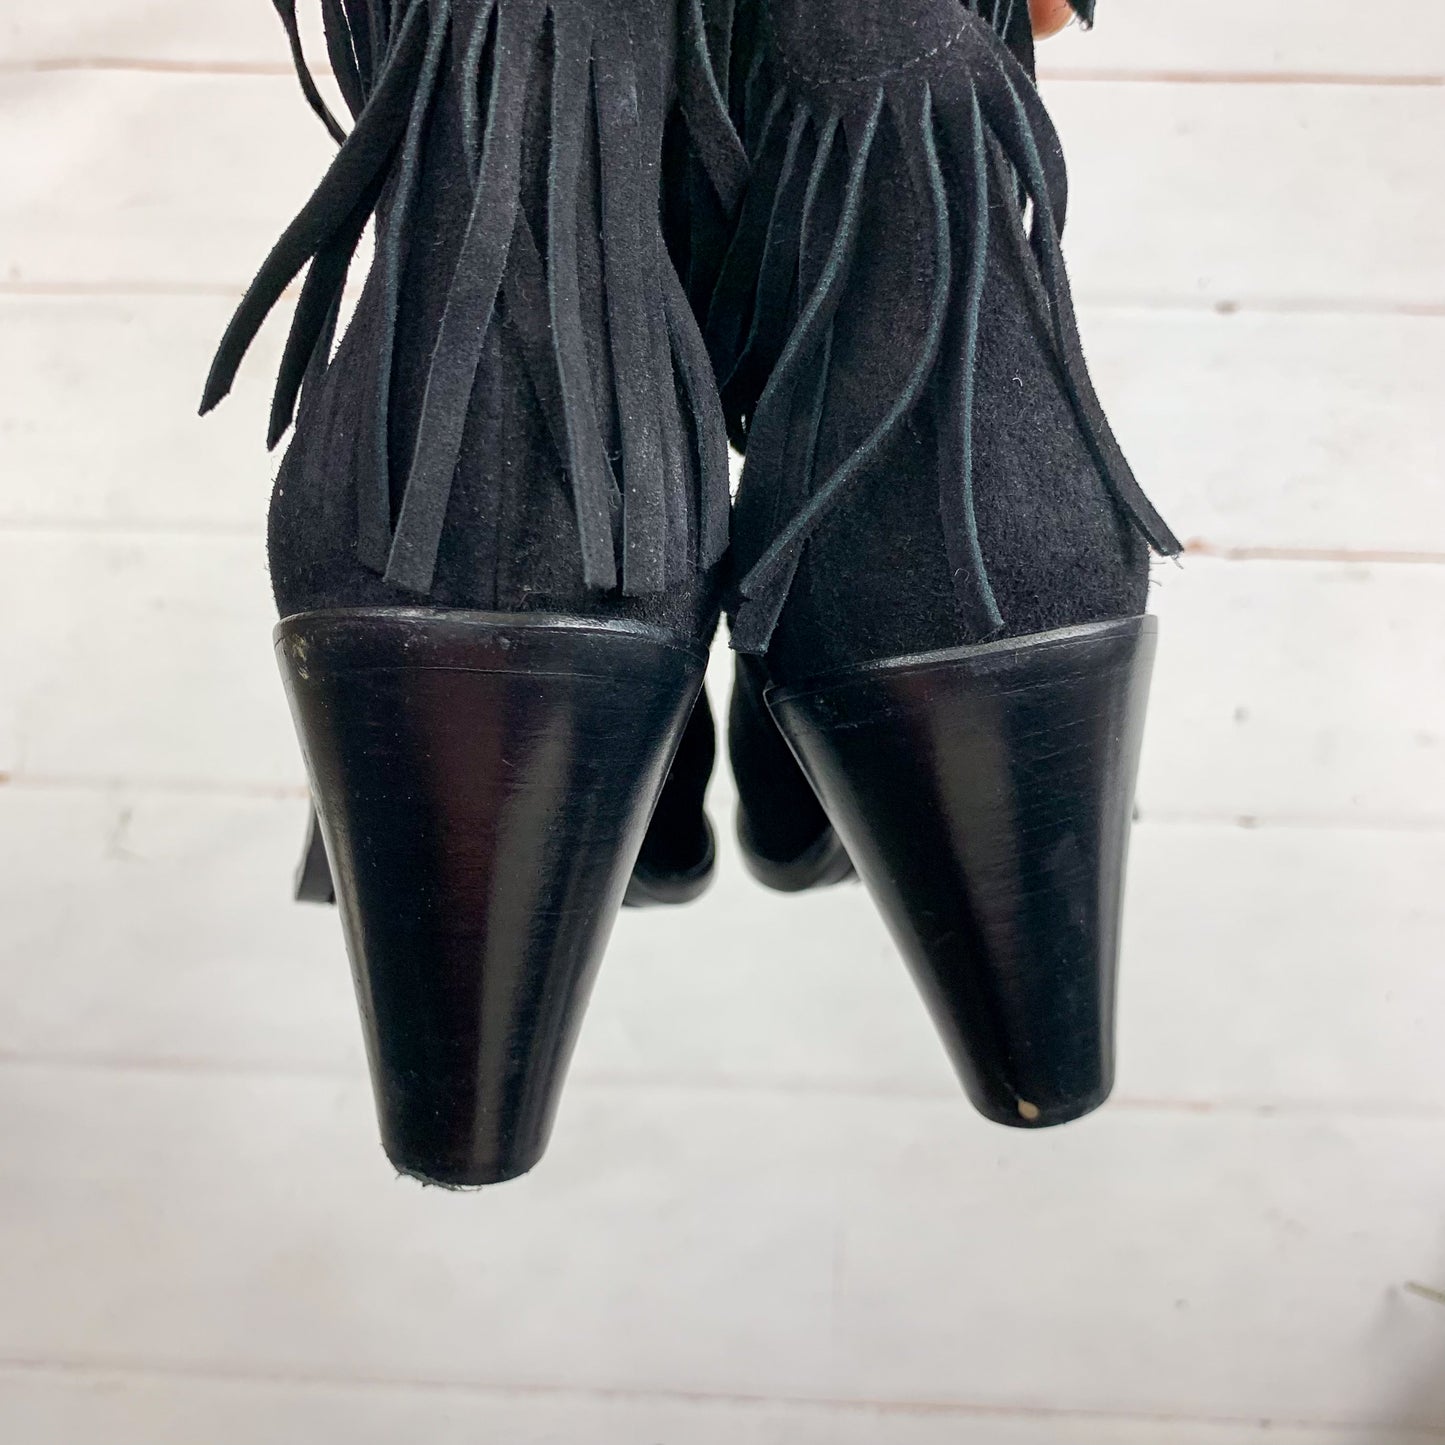 Boots Luxury Designer By Yves Saint Laurent  Size: 8.5